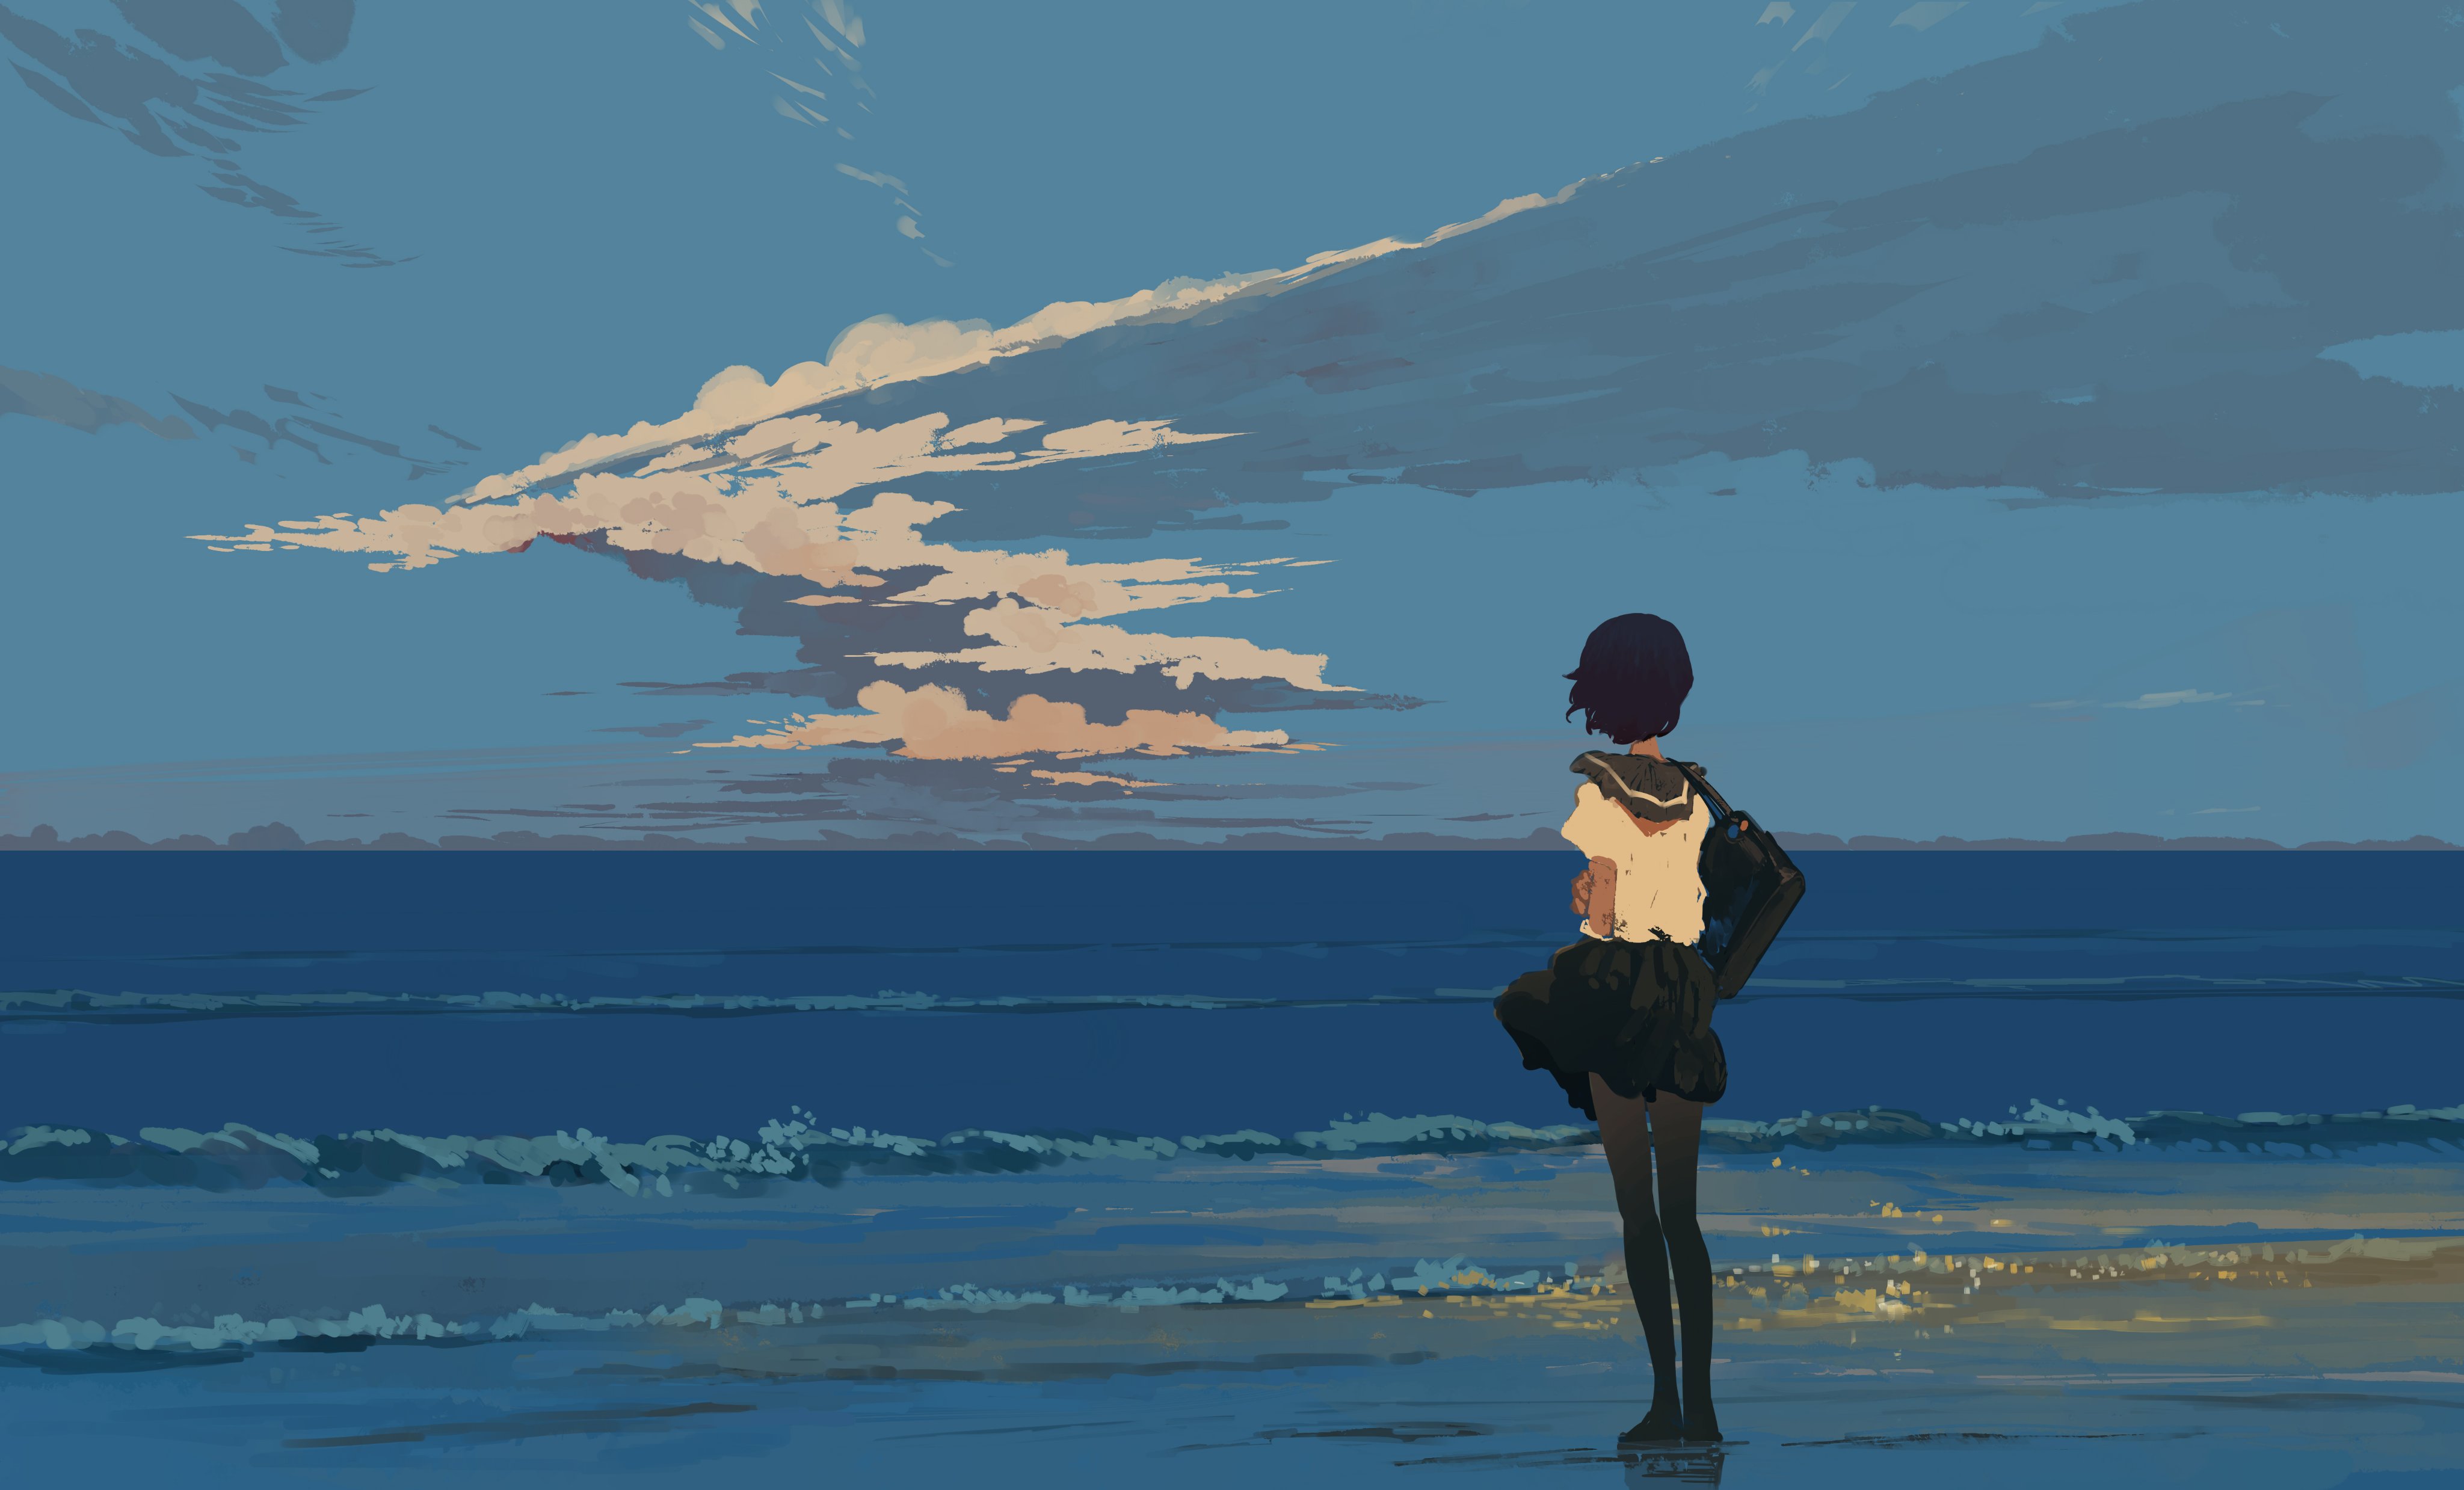 School Uniform Beach Seashore Sunset Peaceful Waves Bangjoy Schoolgirl Standing Water Clouds Sky 4096x2477